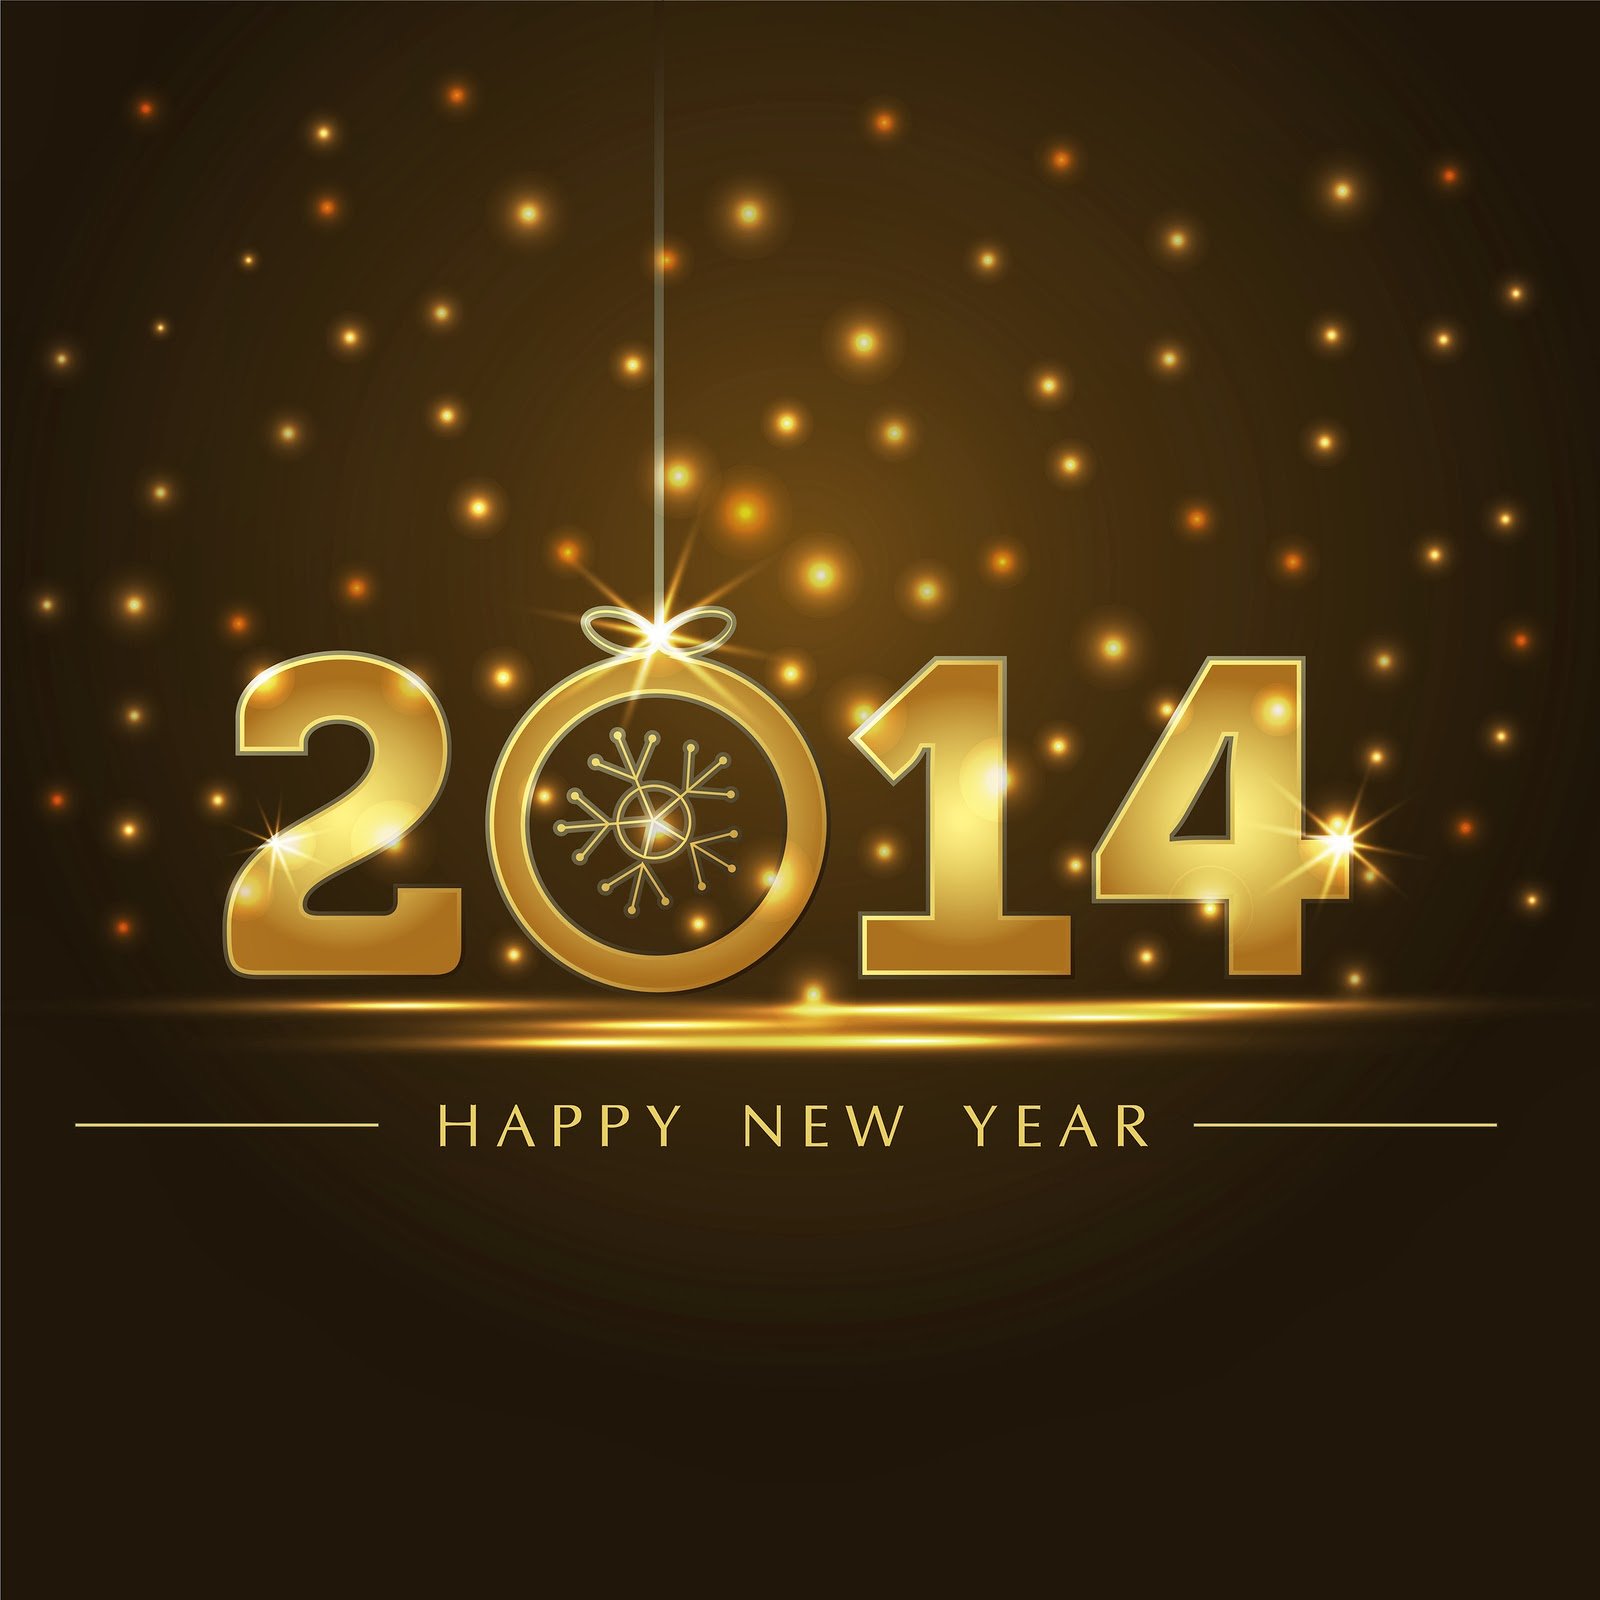 Happy New Year 2014 1